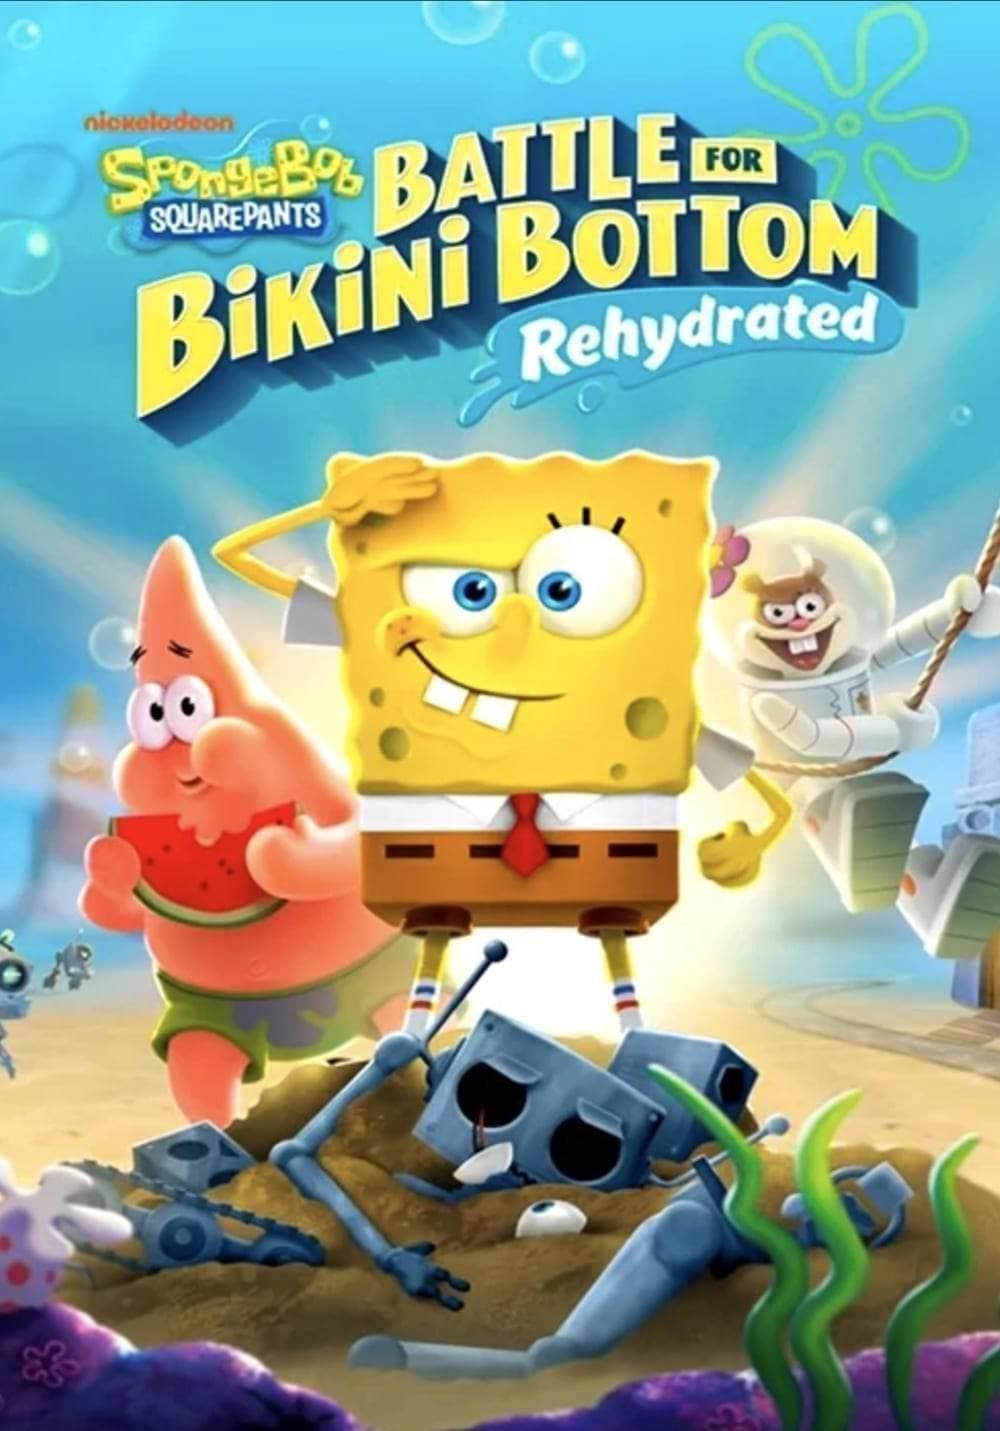 spongebob-squarepants-battle-for-bikini-bottom-rehydrated-cover